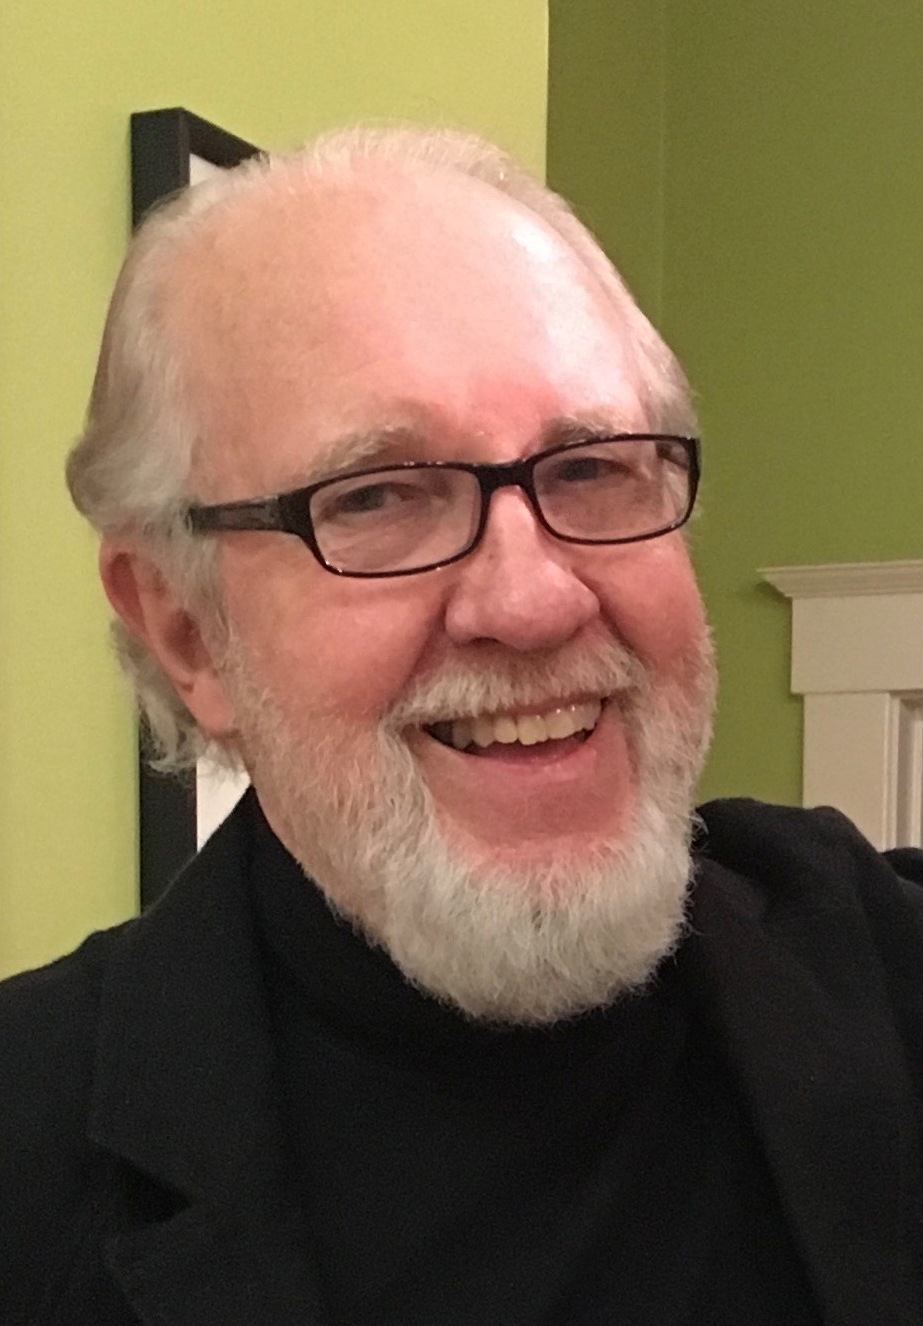 Producer Norbert Putnam